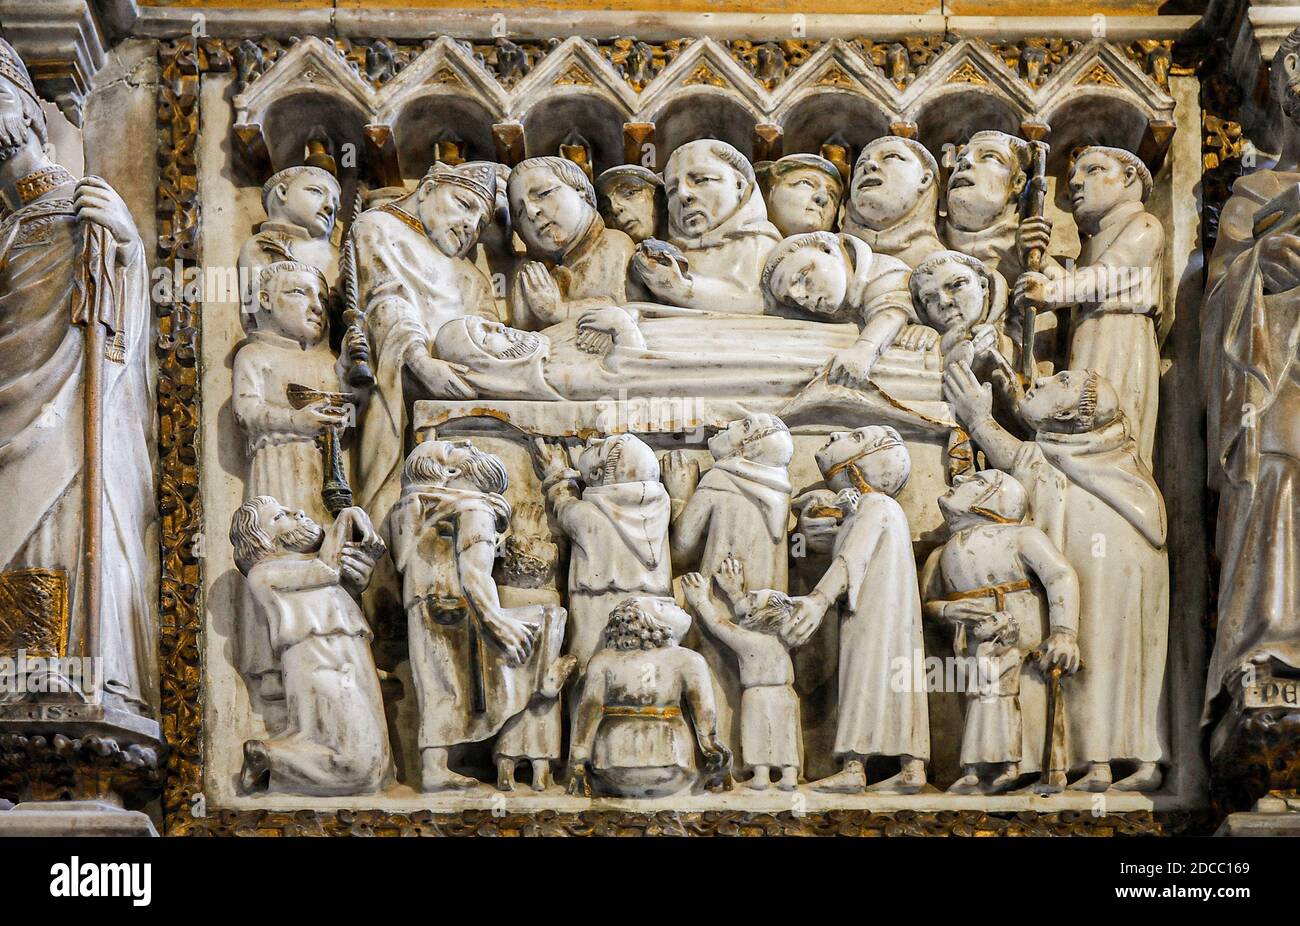 Italy Lombardia - Milan - Church of Sant'Eustorgio - Cloister of Saint Eustorgio - Portinari Chapel - Ark of St. Peter Martyr by Giovanni di Balduccio - funeral of the saint Stock Photo